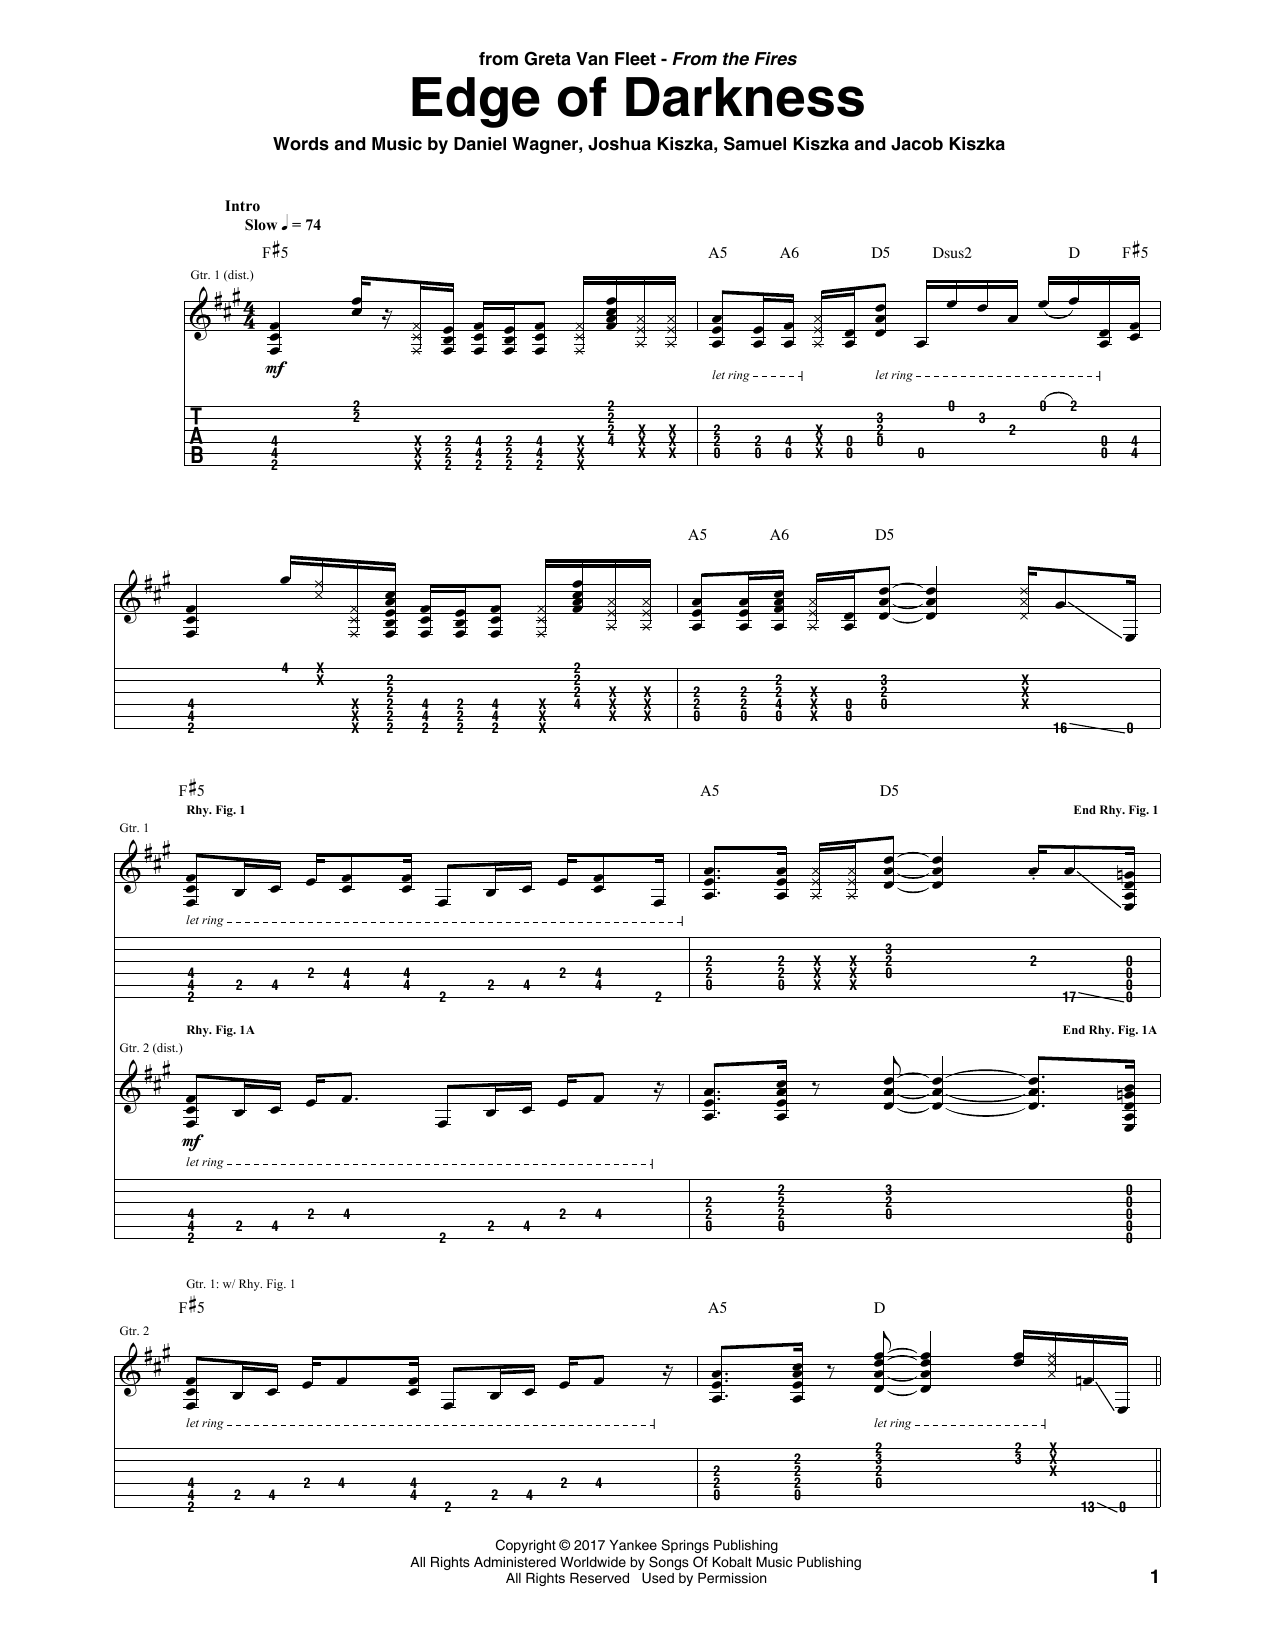 Greta Van Fleet Edge Of Darkness Sheet Music Notes & Chords for Guitar Tab - Download or Print PDF